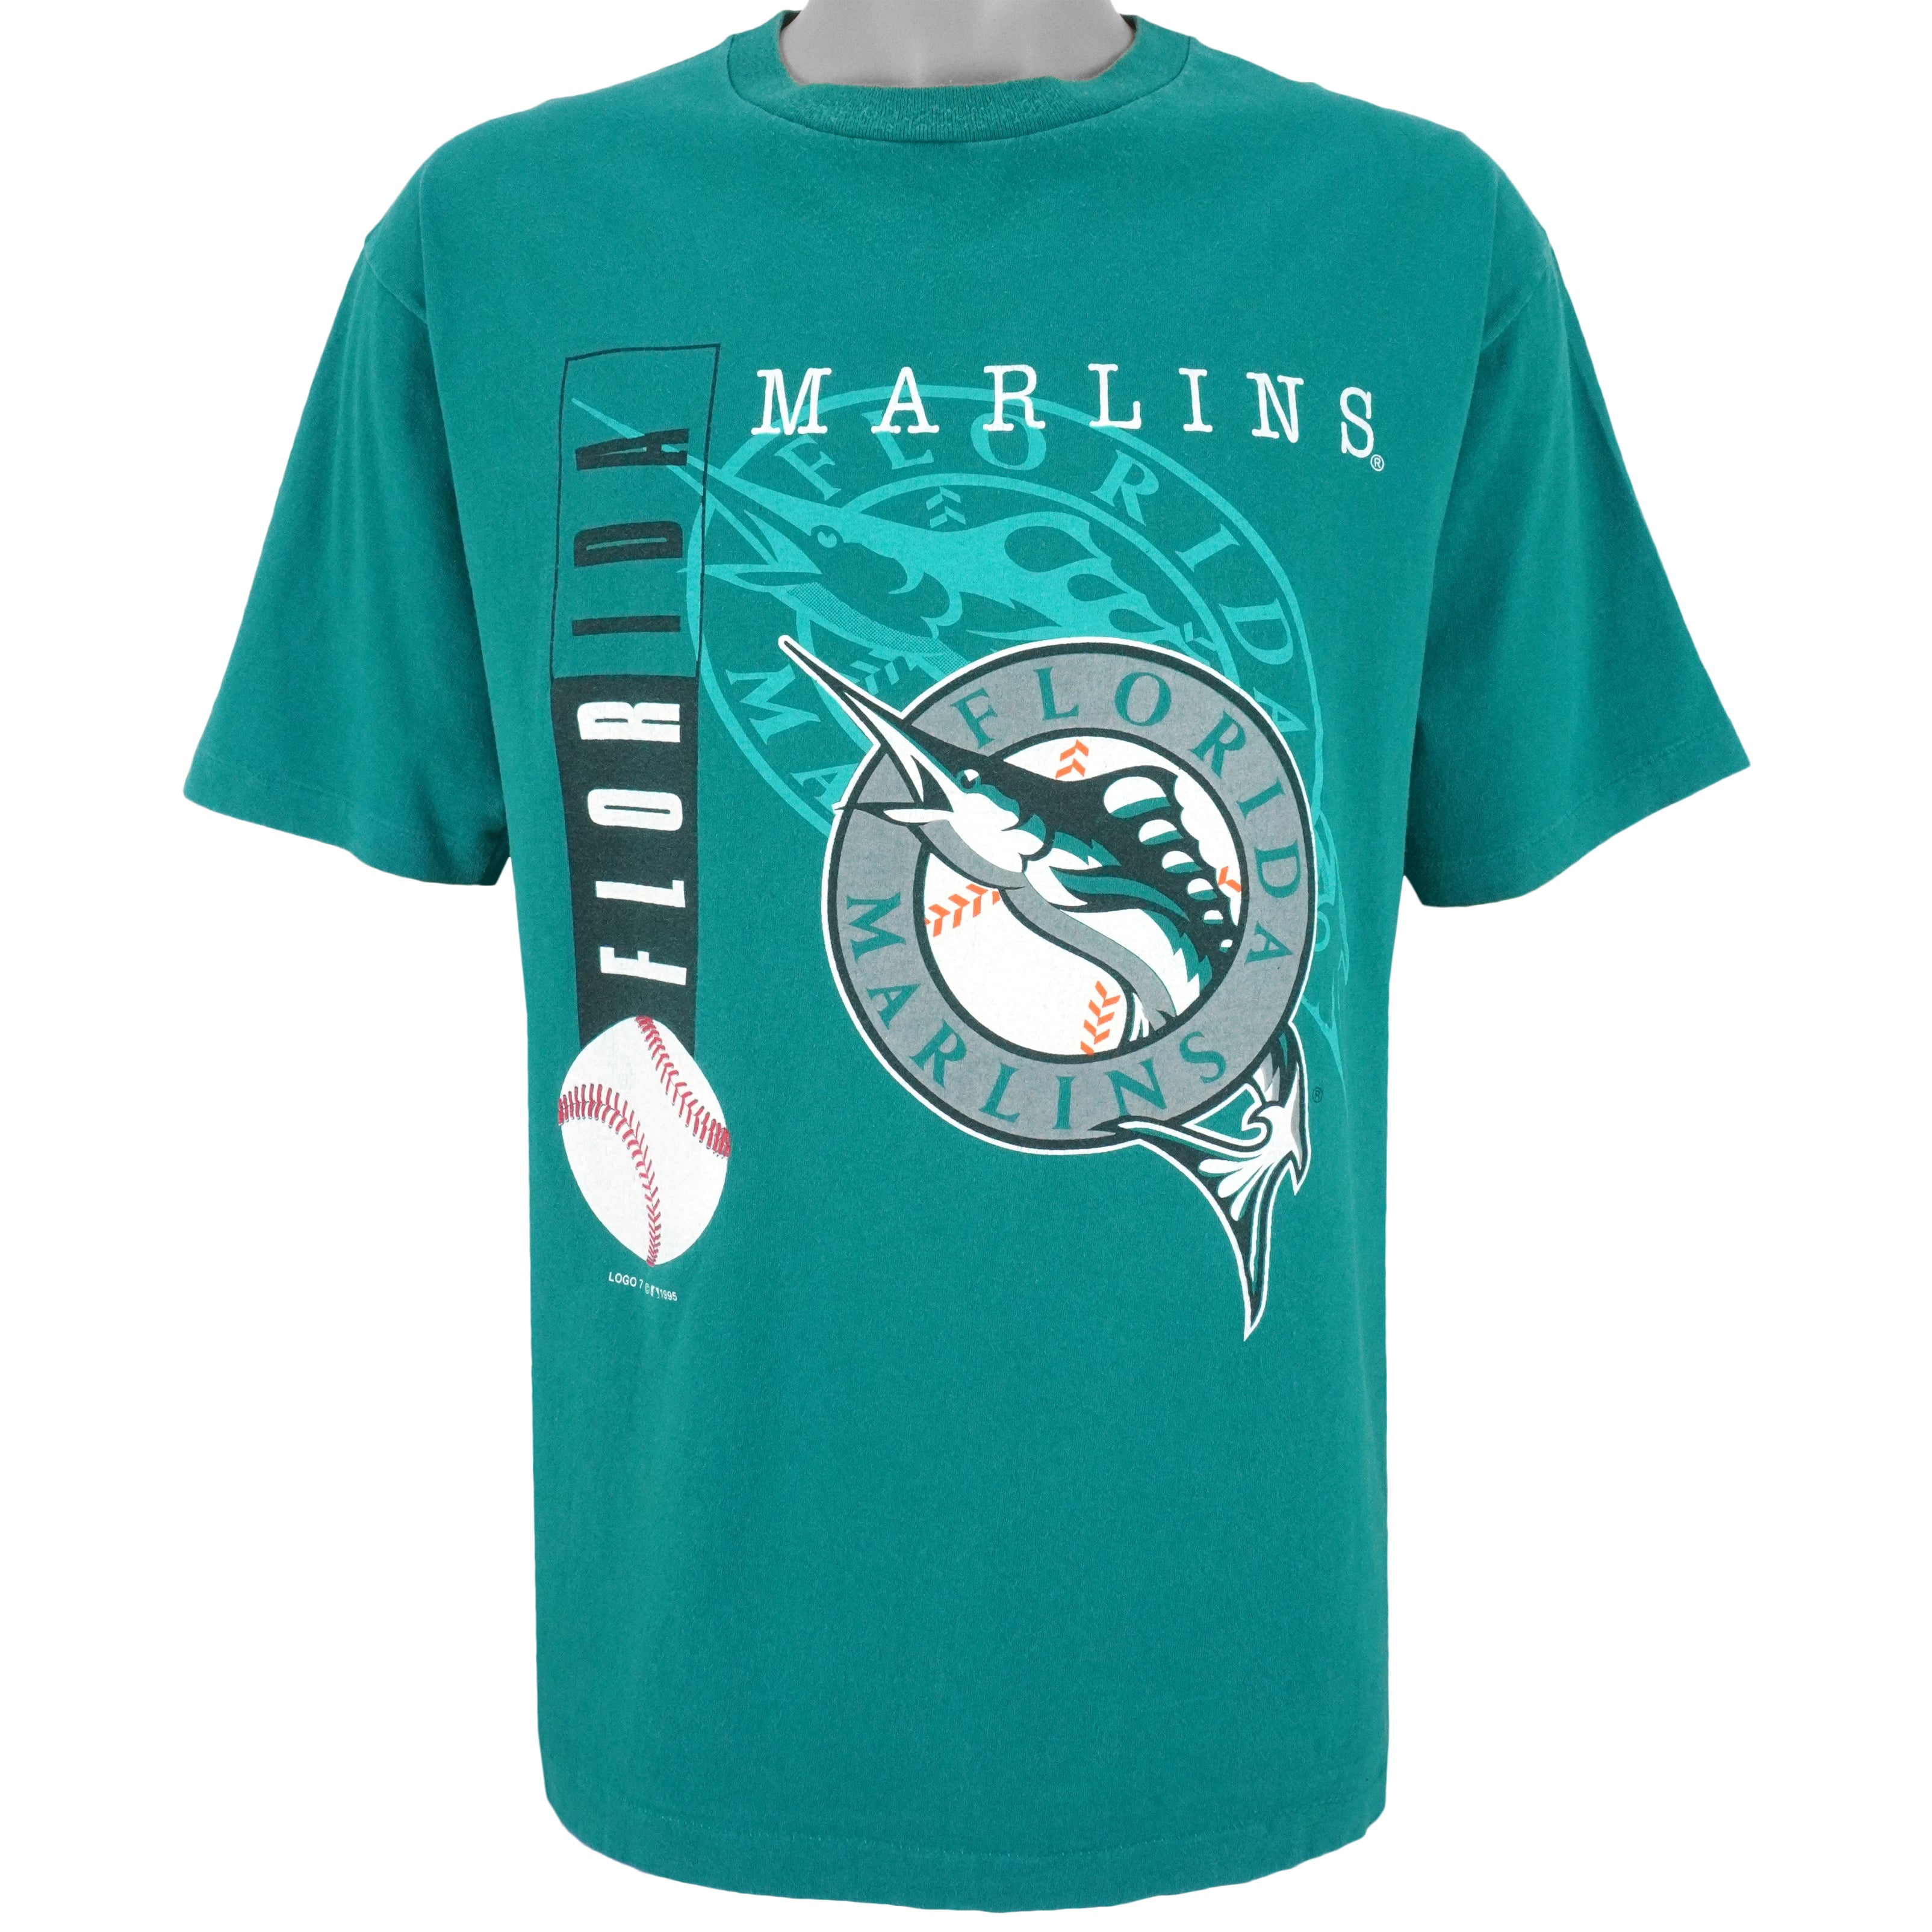 Vintage Florida Miami Marlins Baseball T-shirt Sz. XL